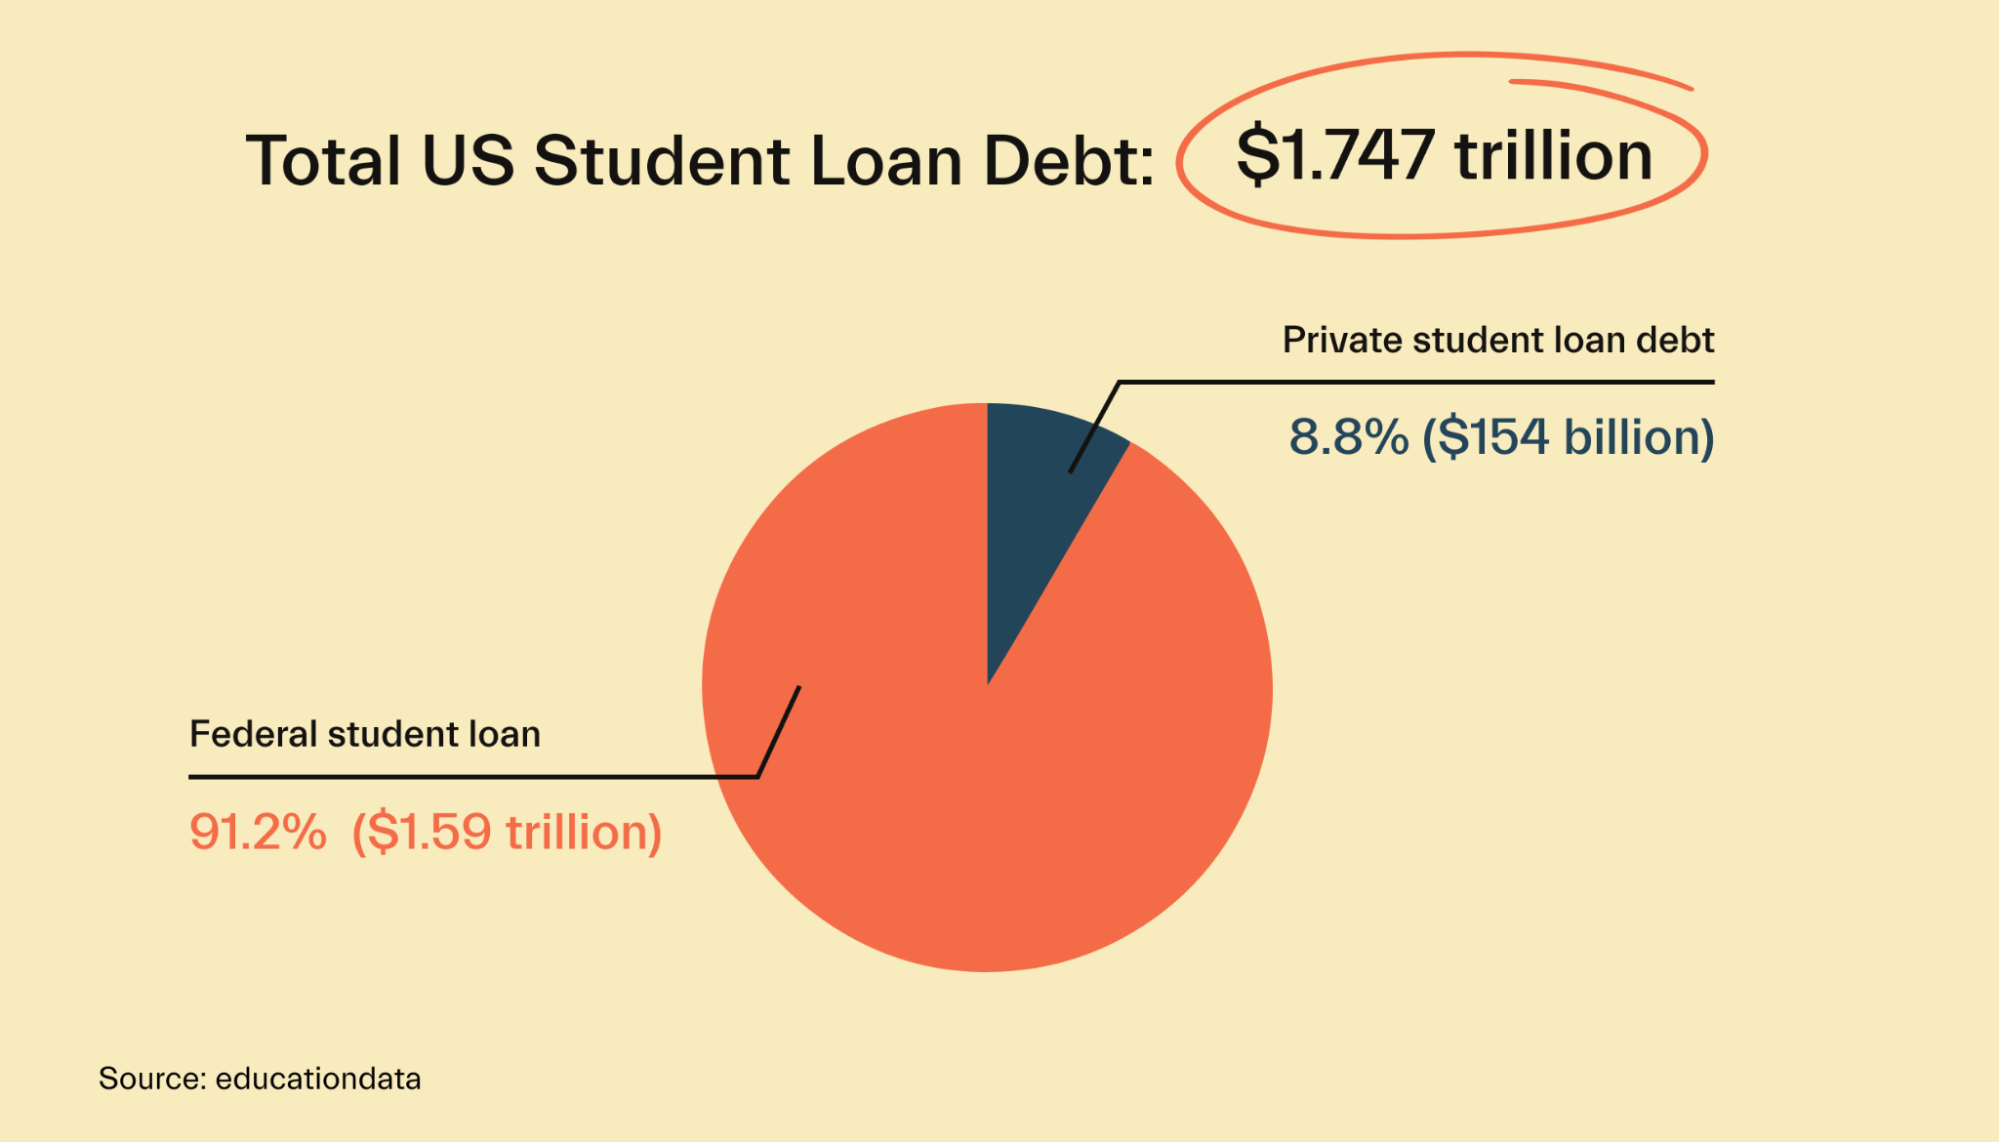 Private student loan debt